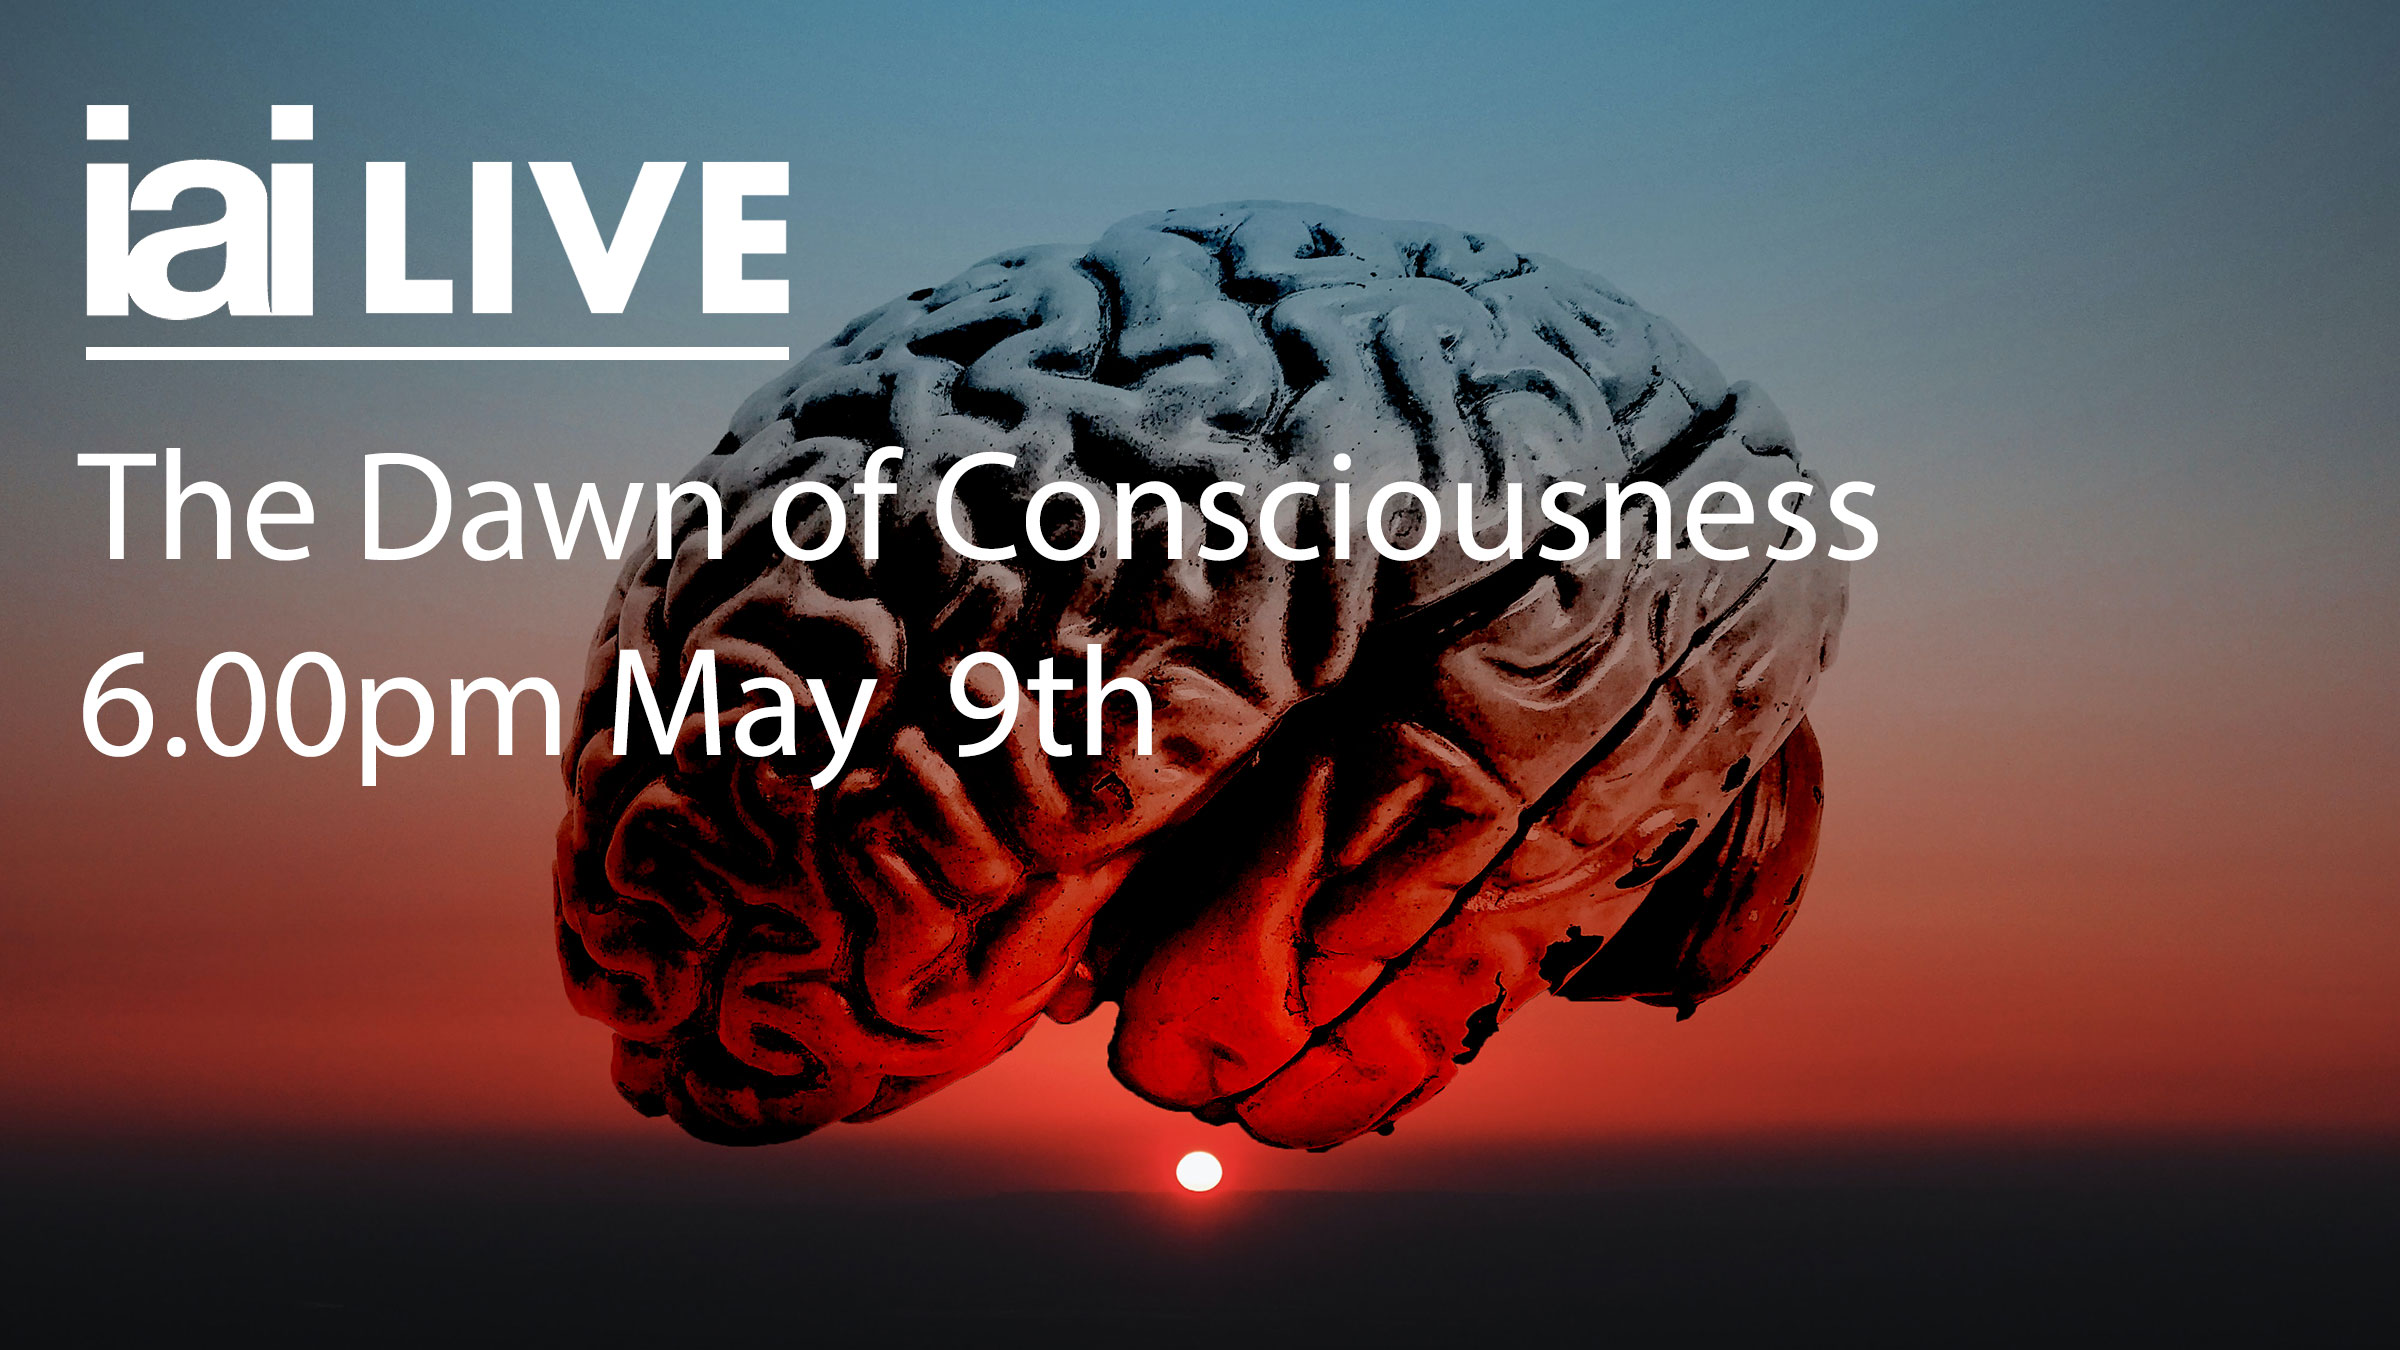 Headline Debate - The Dawn of Consciousness